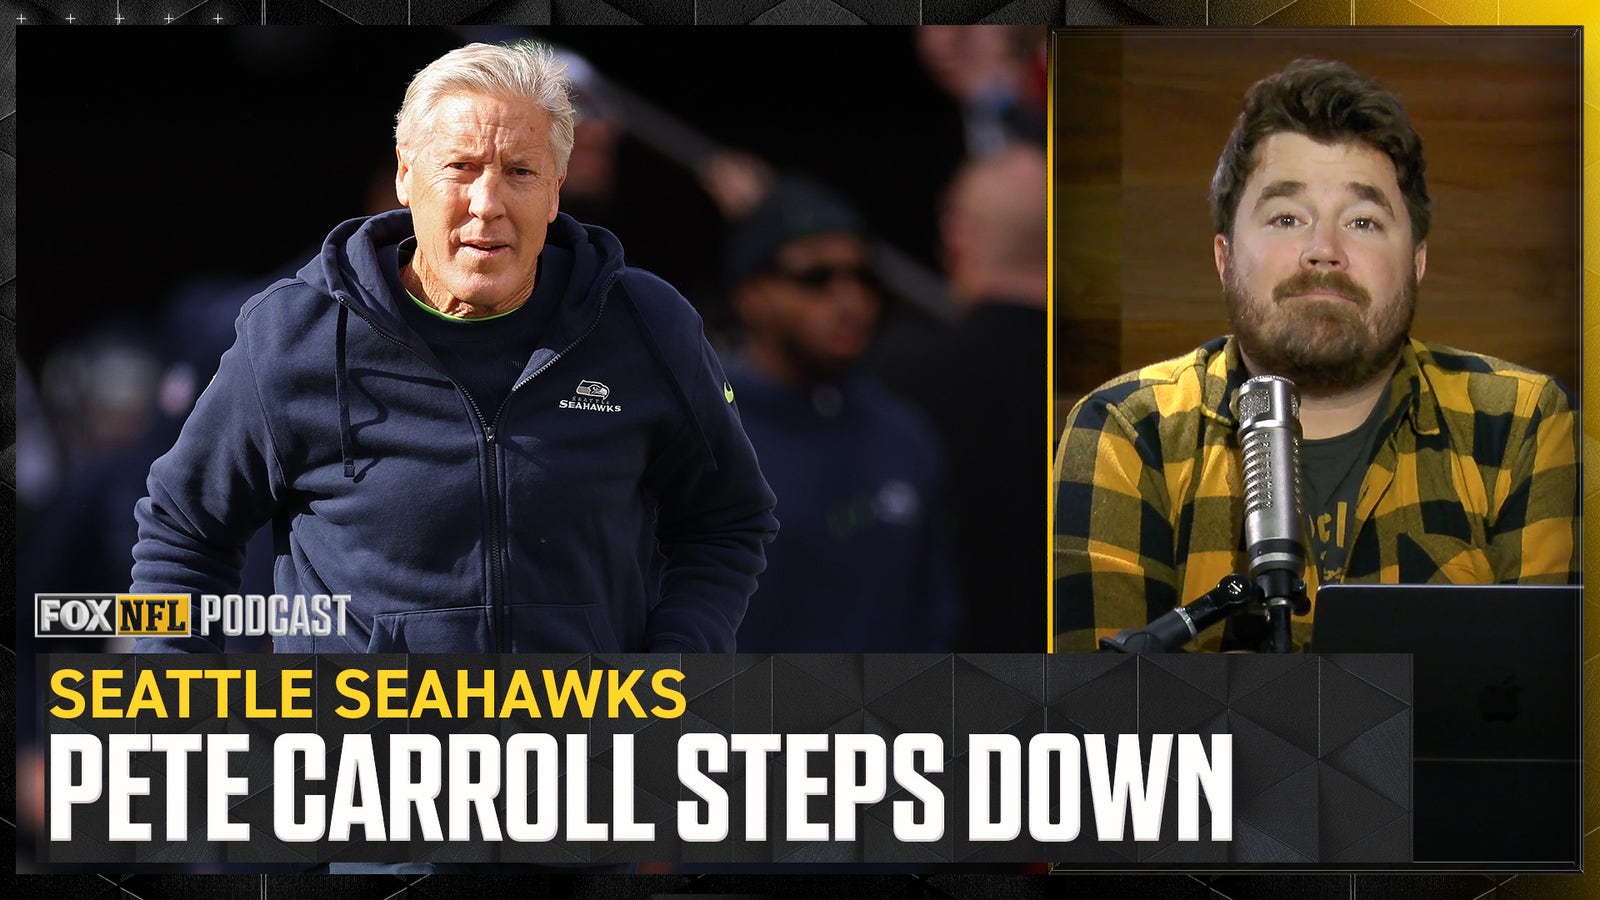 Pete Carroll steps down as Seahawks' head coach - Dave Helman reacts